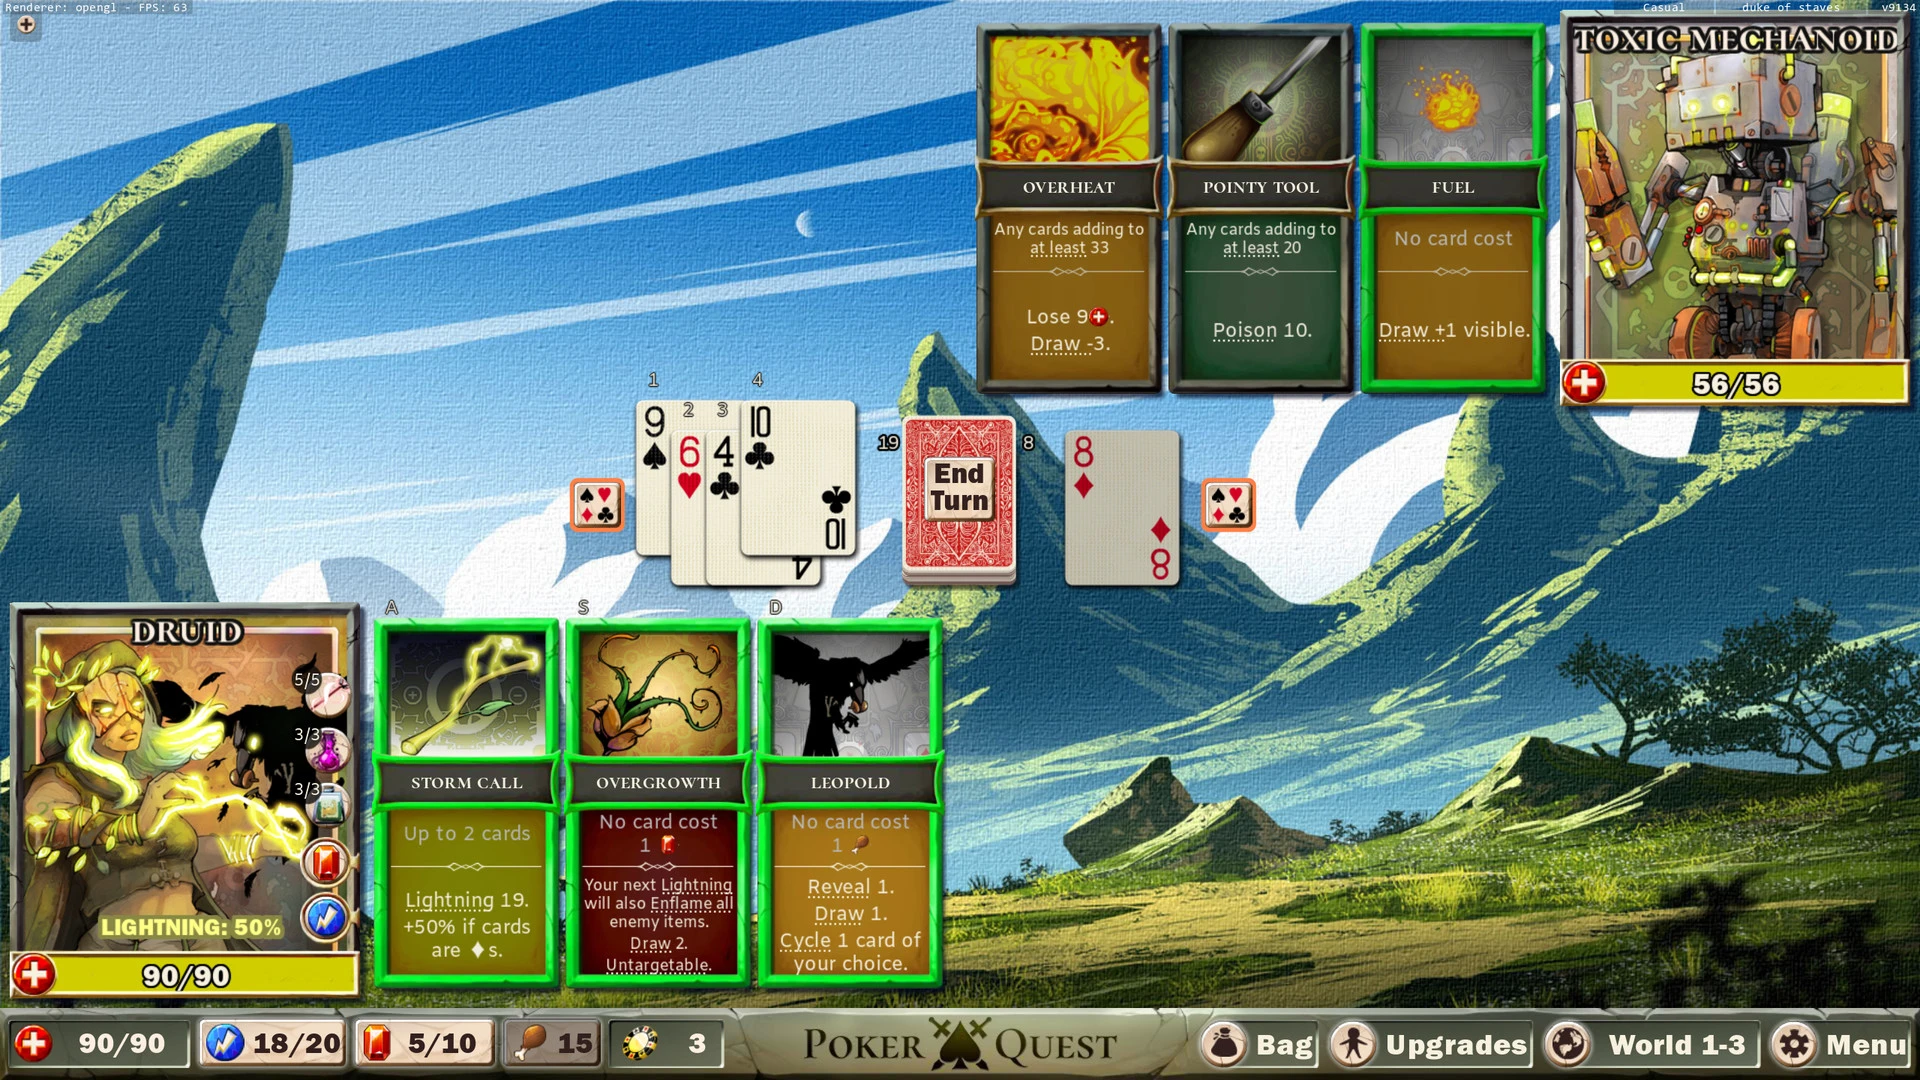 Poker Quest Screenshot of Battle with Druid